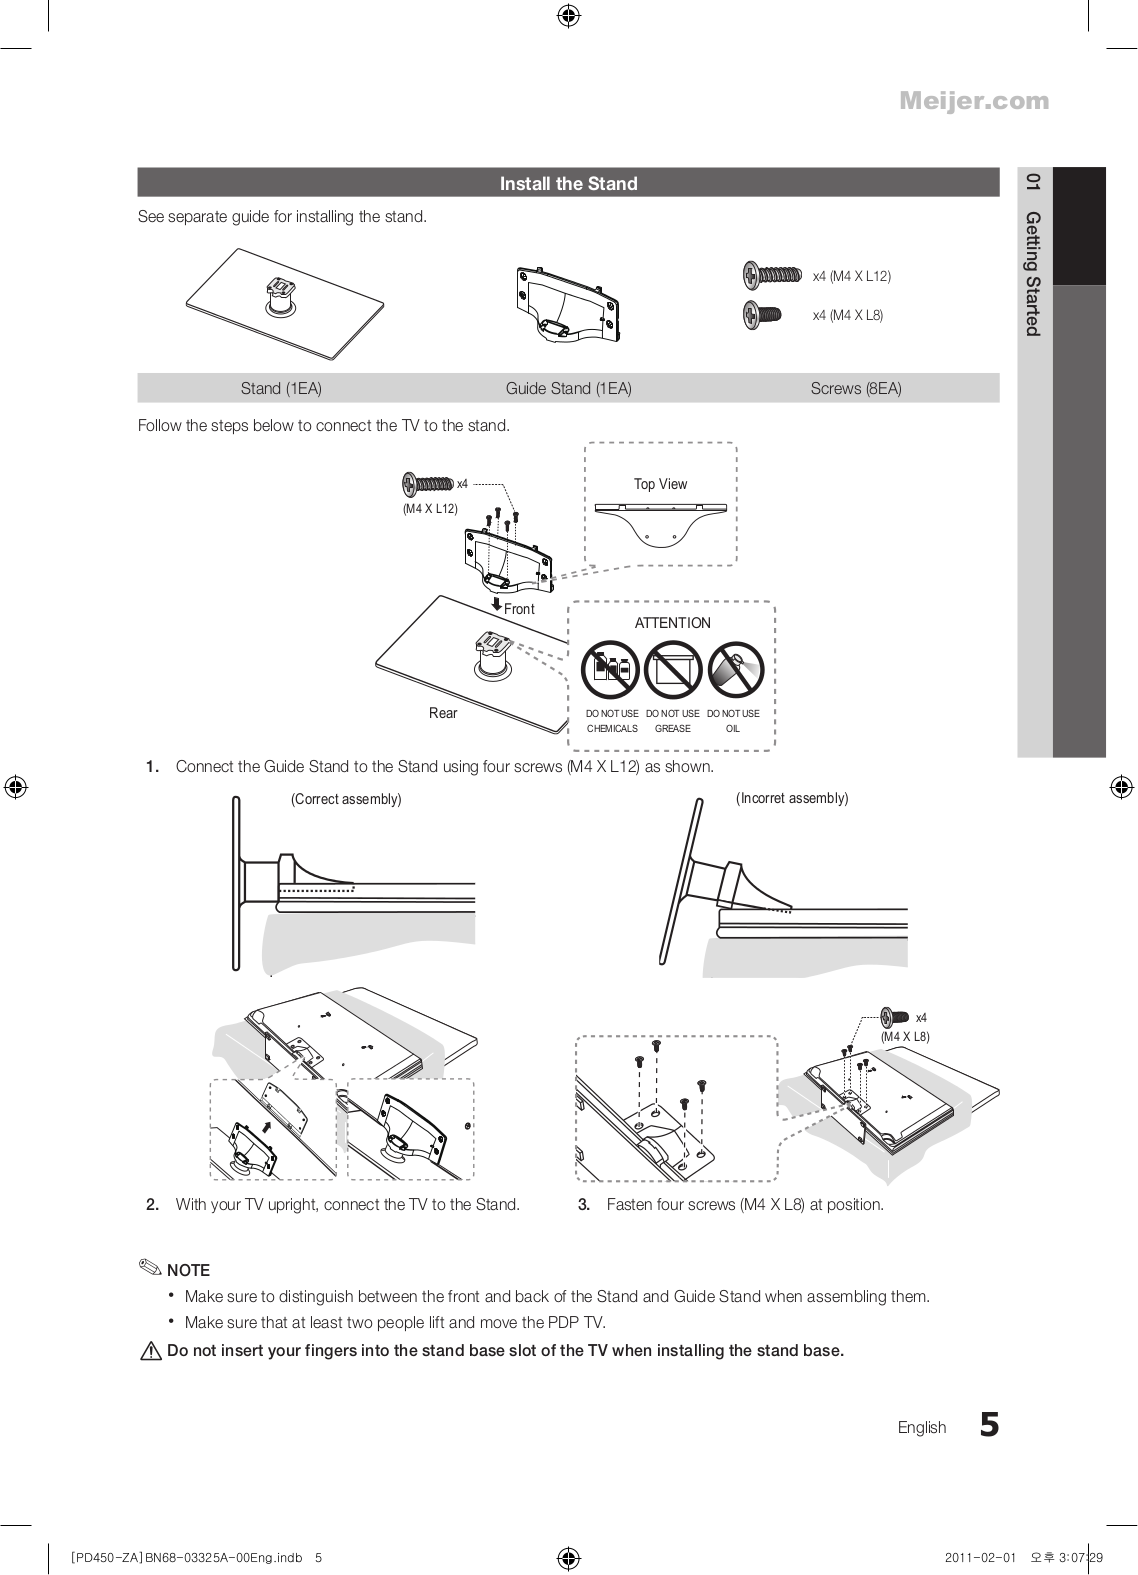 PDF manual for Samsung TV PN43D450